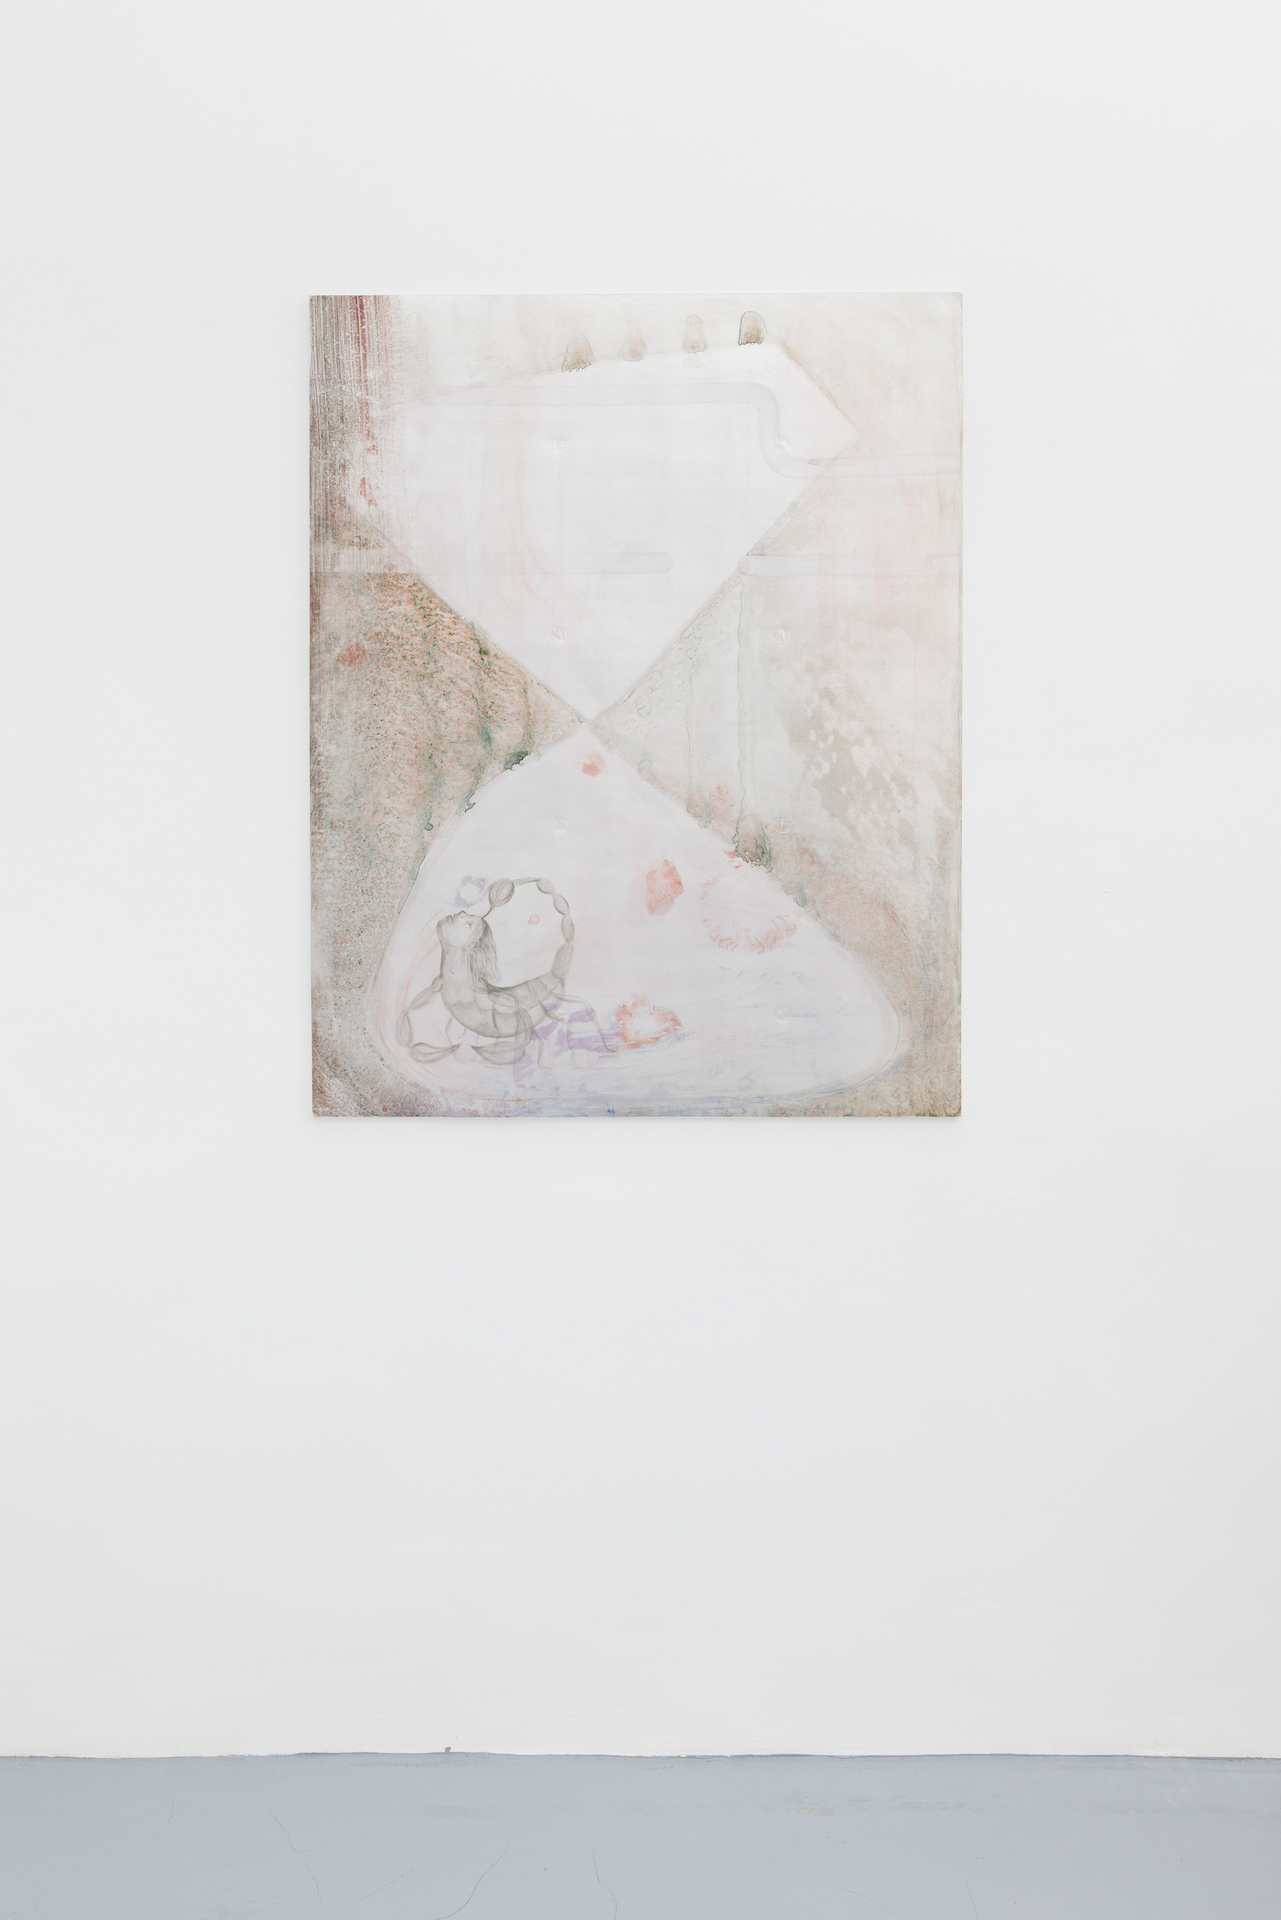 Sarah Księska, Sicherheit [Safety], 2019, acrylics on Tetrapack, 117 x 92 cm